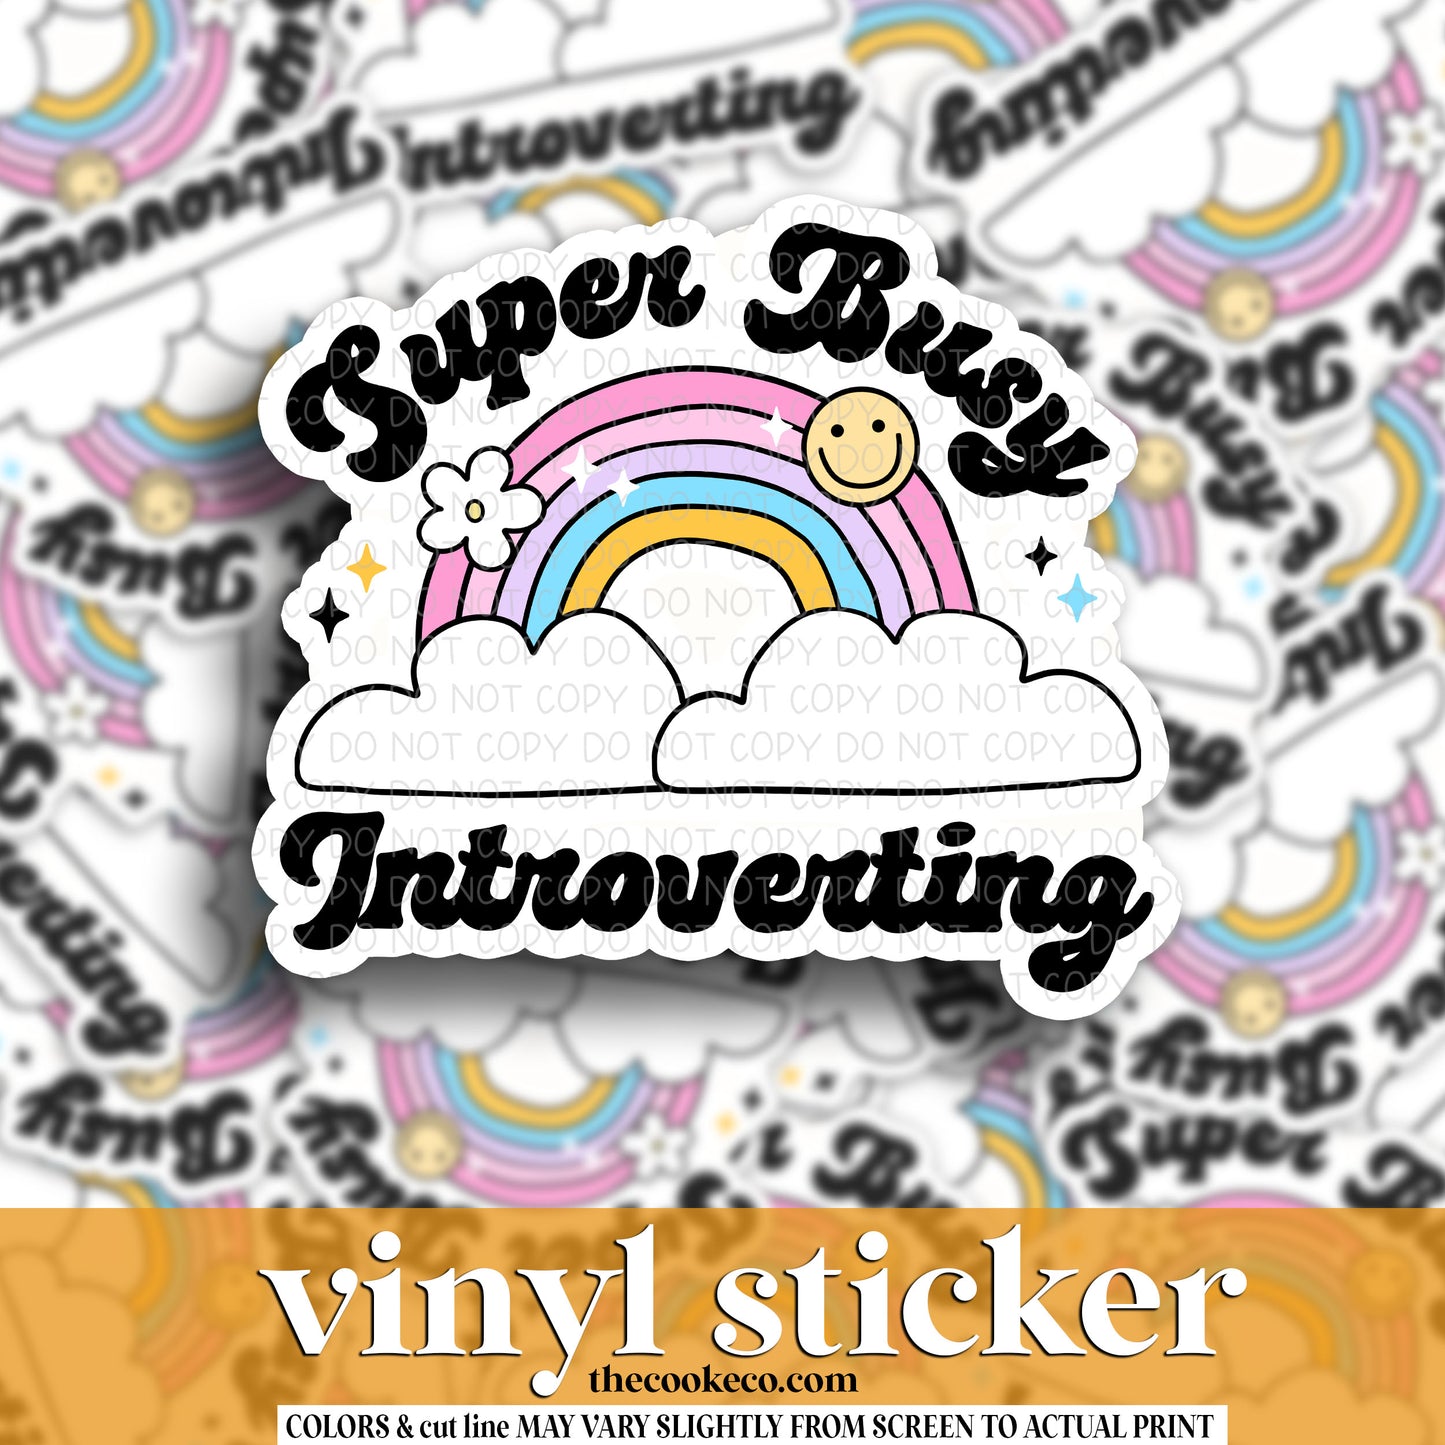 Vinyl Sticker | #V1469 - SUPER BUSY INTROVERTING